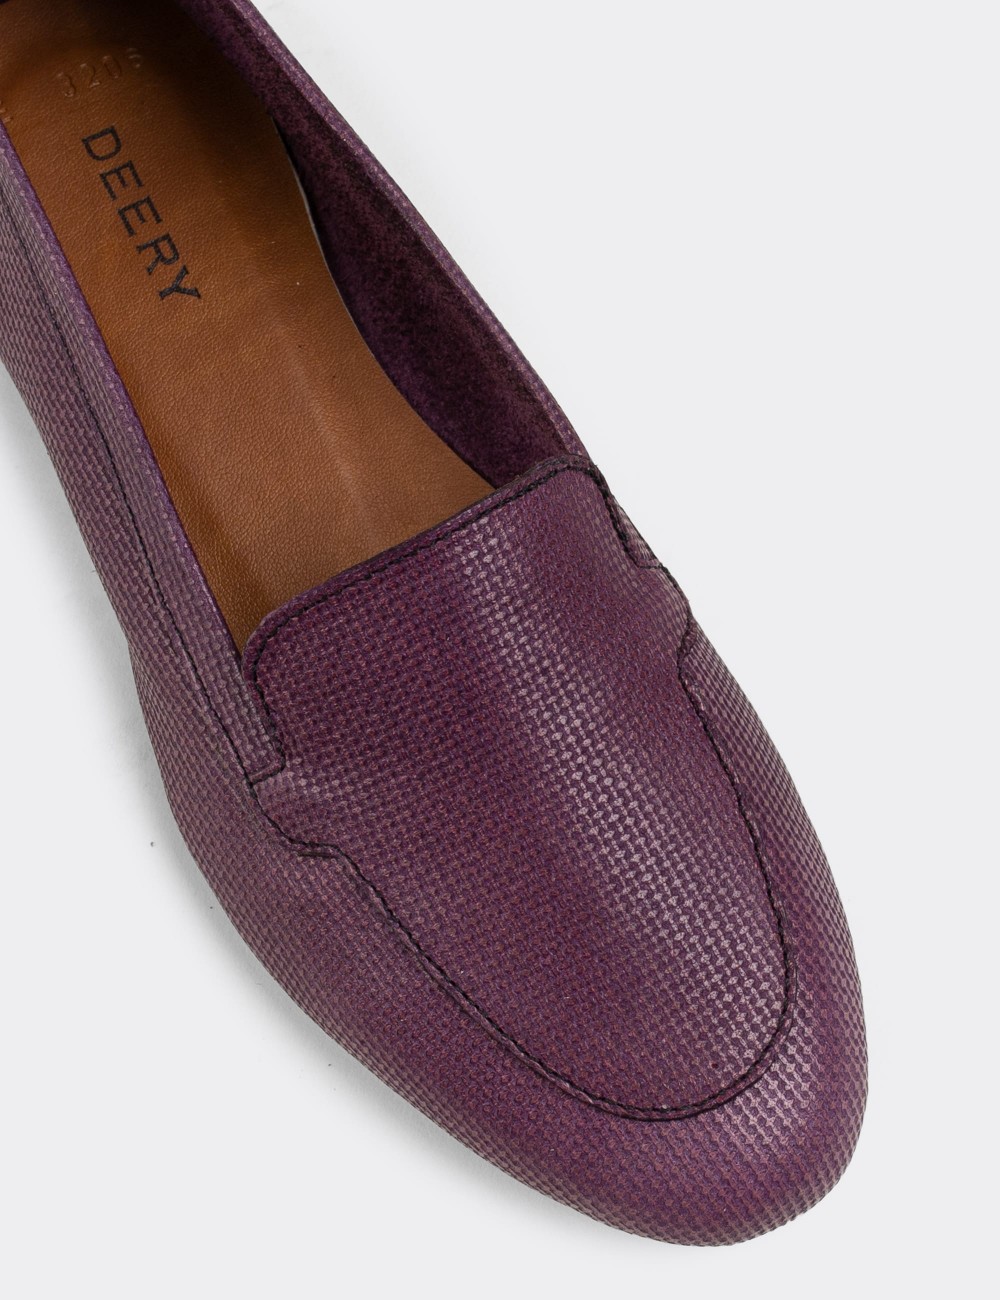 Purple Nubuck Leather Loafers  - E3206ZMORC01